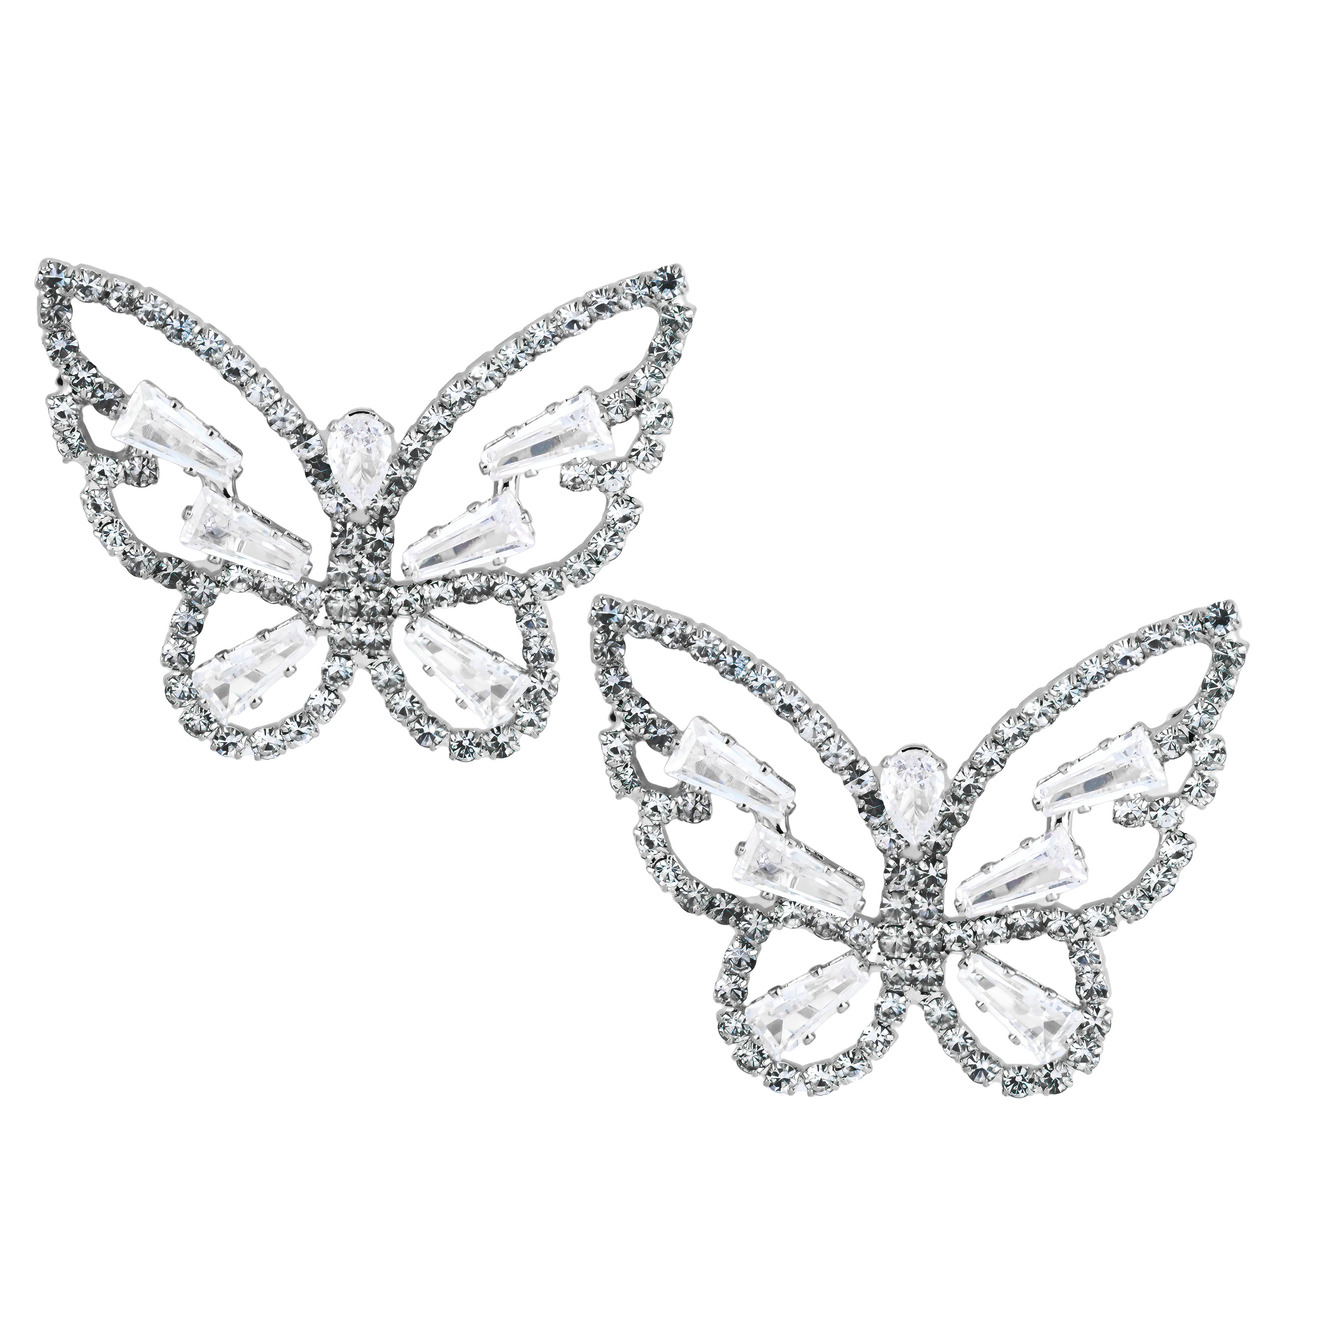 Herald Percy Серебристые серьги-бабочки с кристаллами herald percy серебристые серьги бабочки с кристаллами